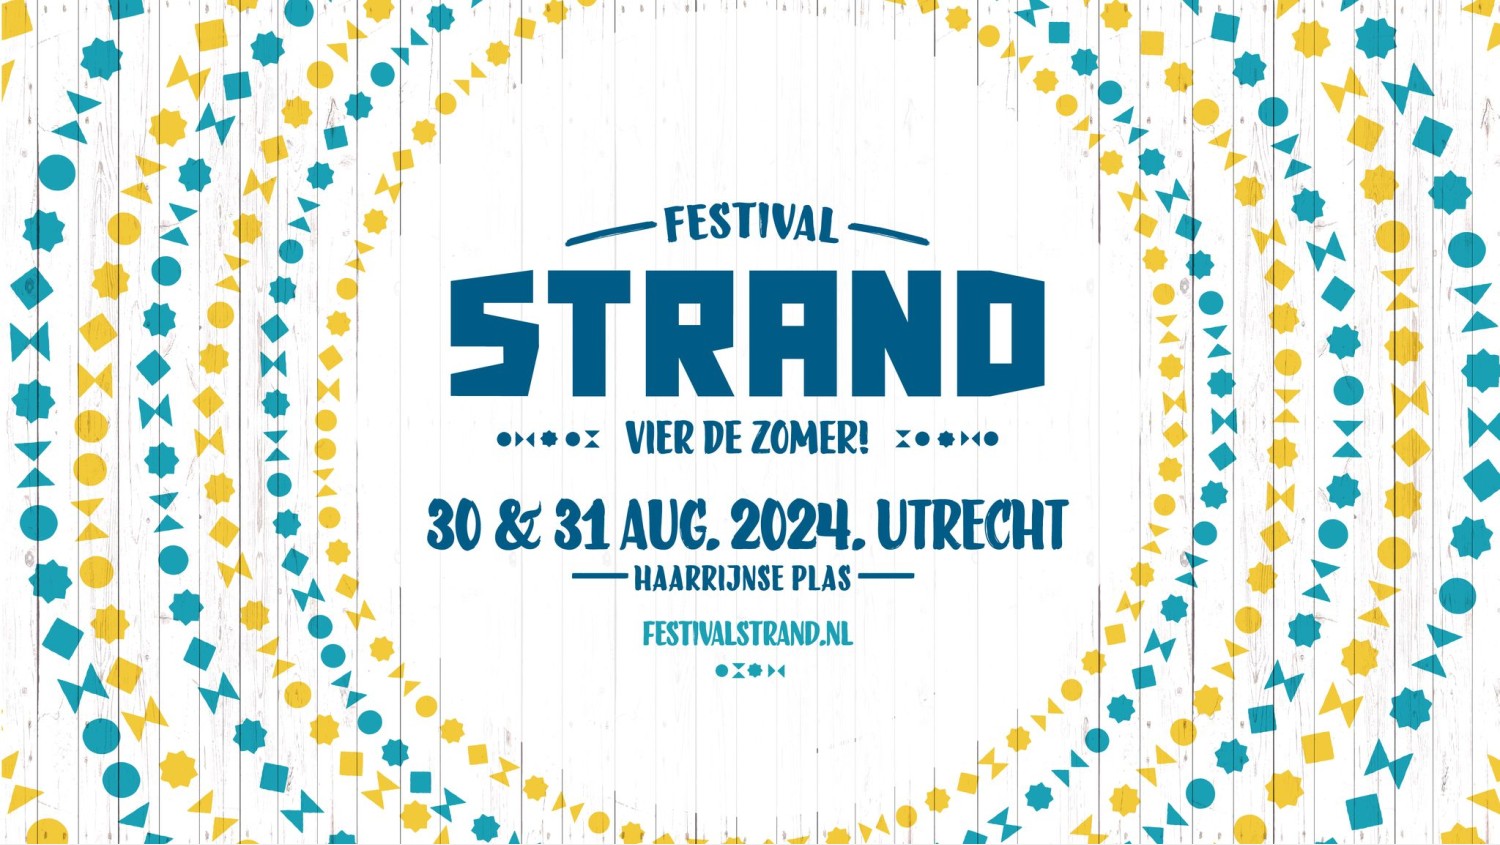 Festival Strand 2024